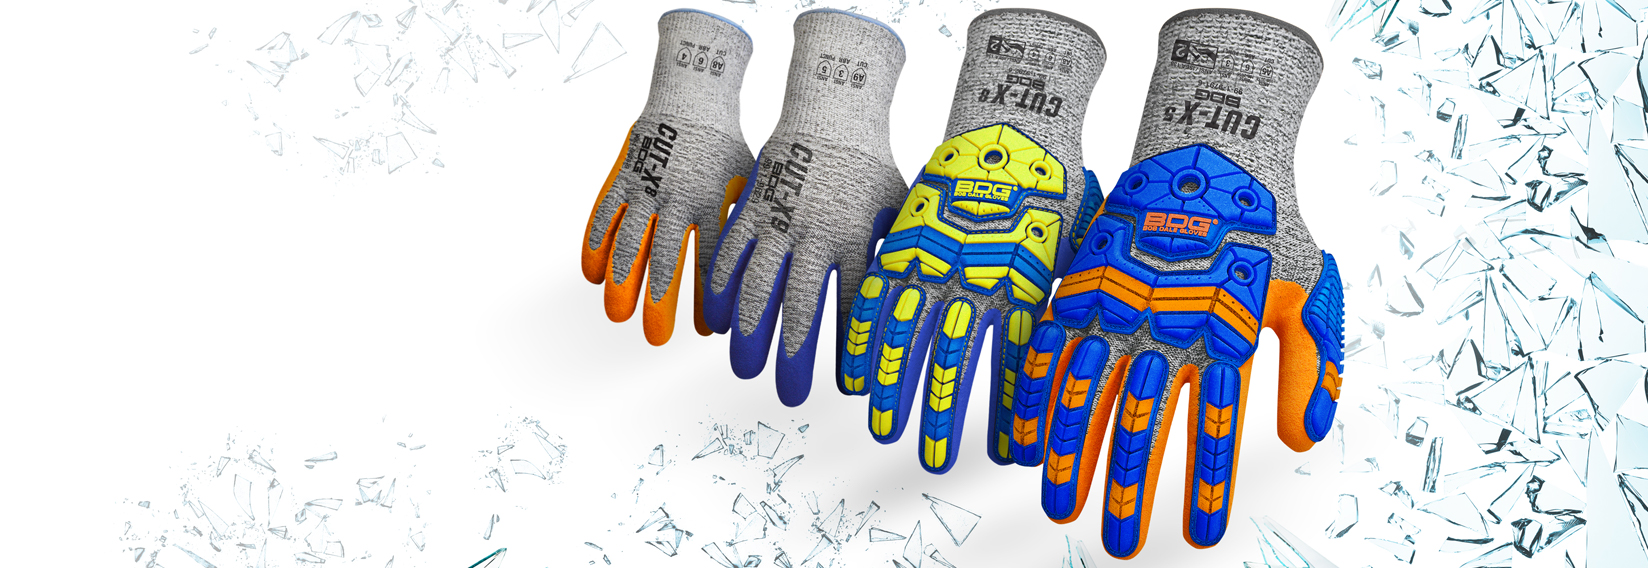 Bob Dale Gloves (BDG)  North American Safety Gloves